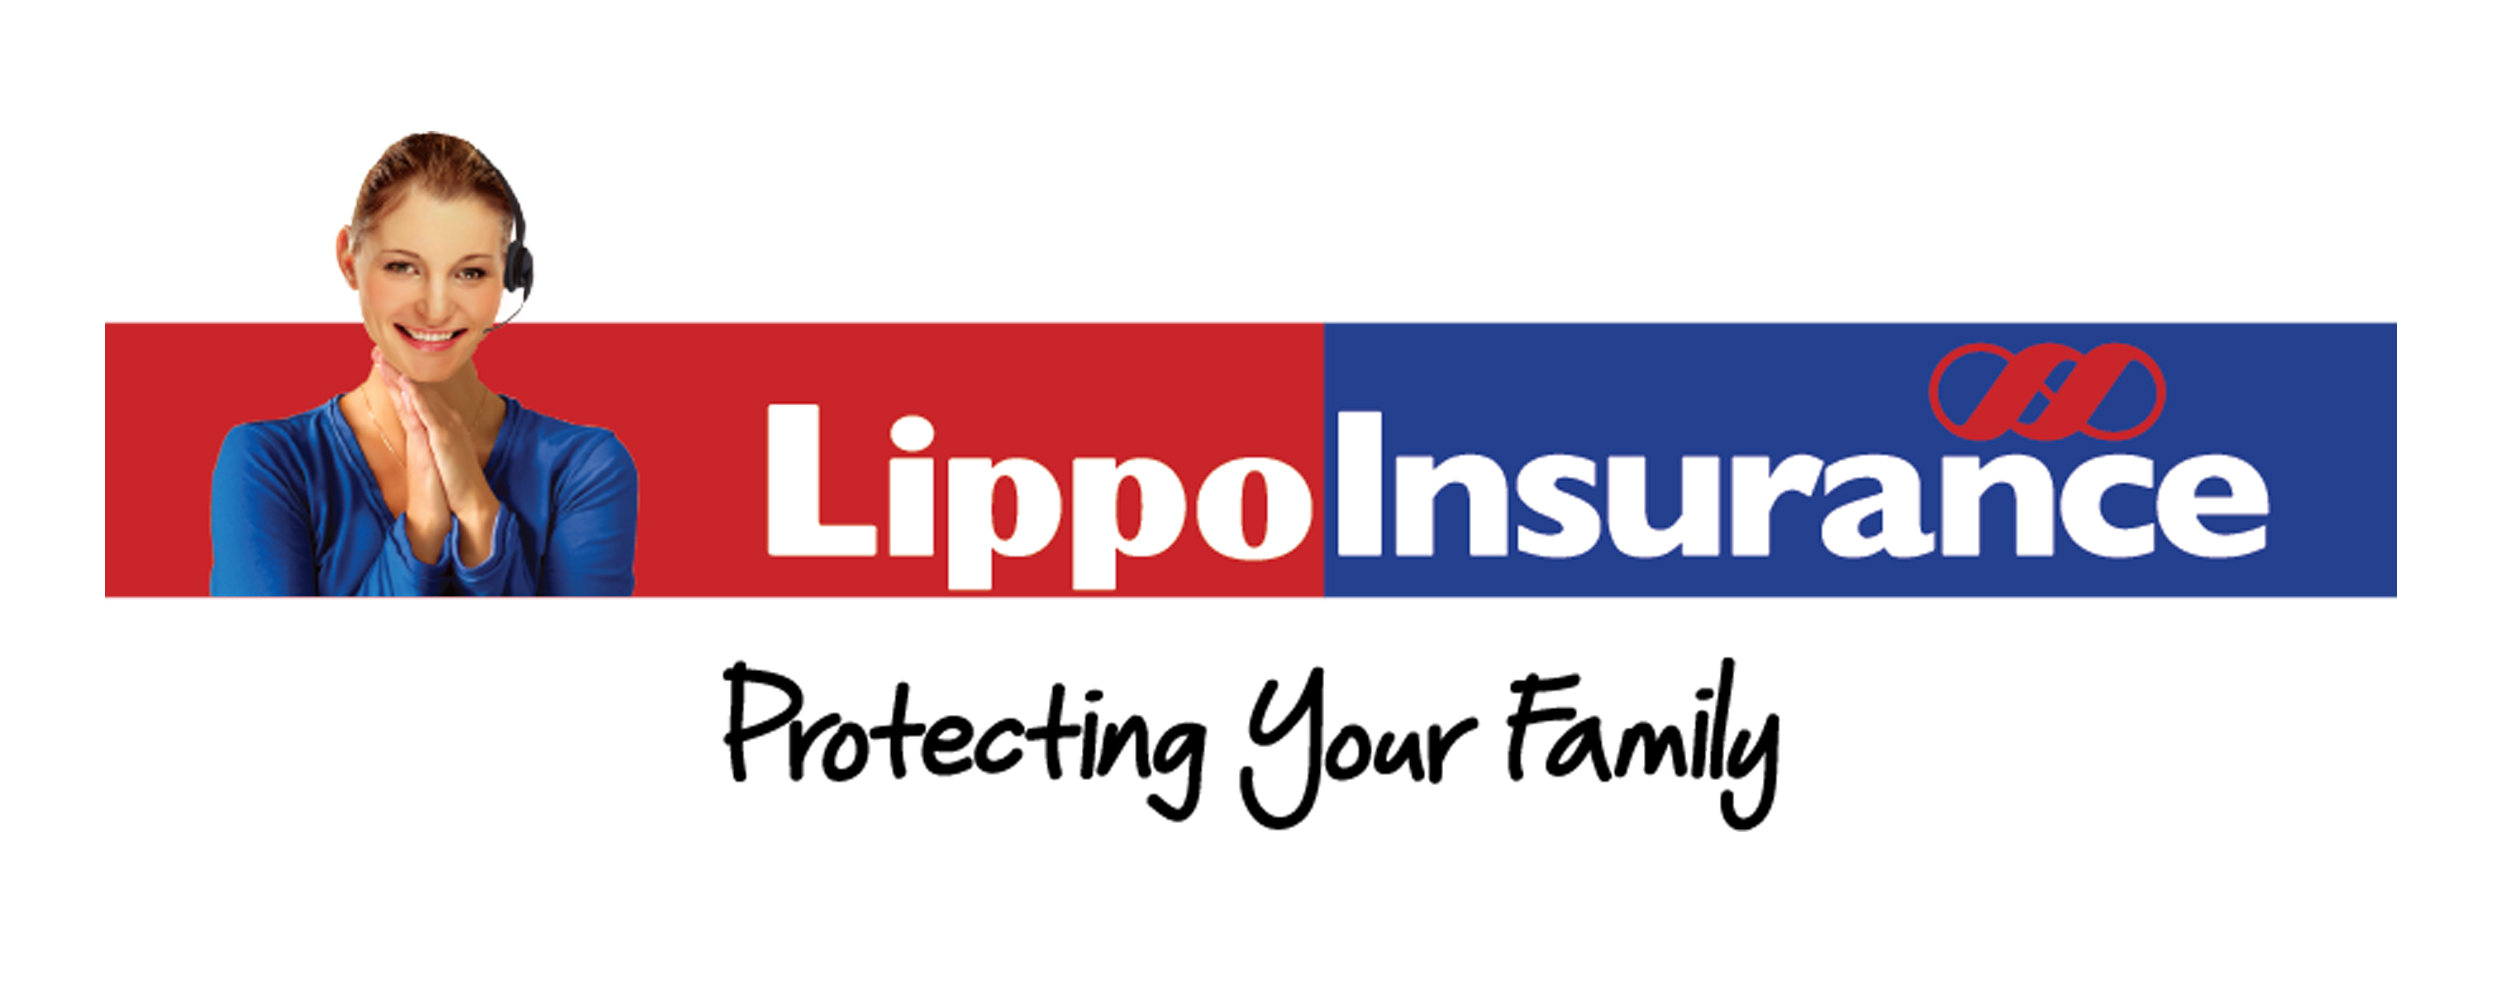 Asuransi Lippo Insurance